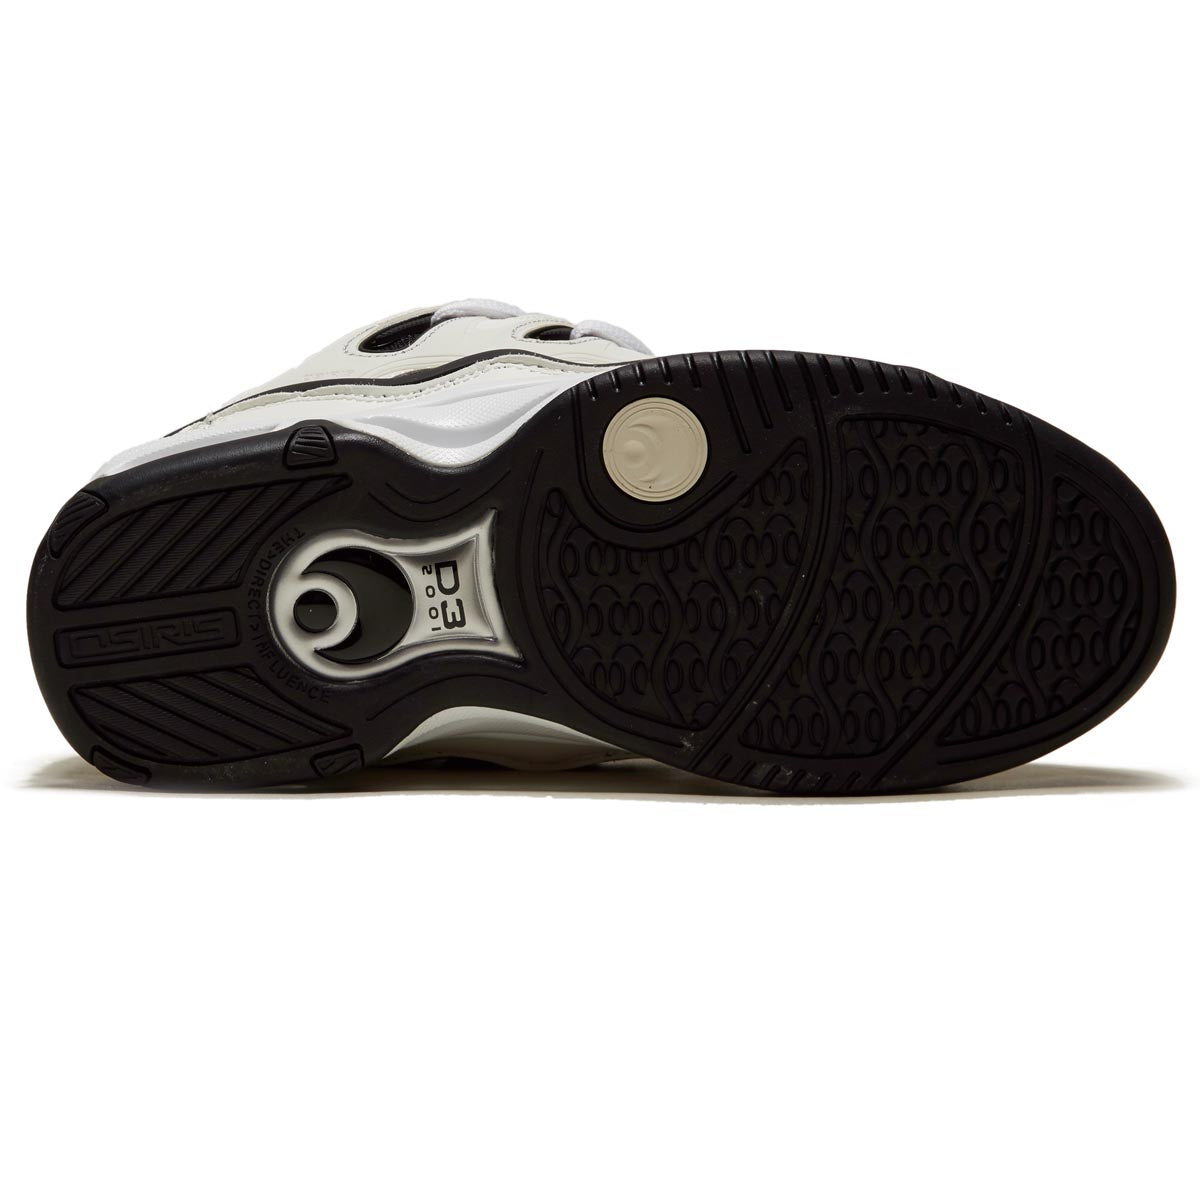 Osiris D3 2001 Shoes - Black/White/Crack image 4